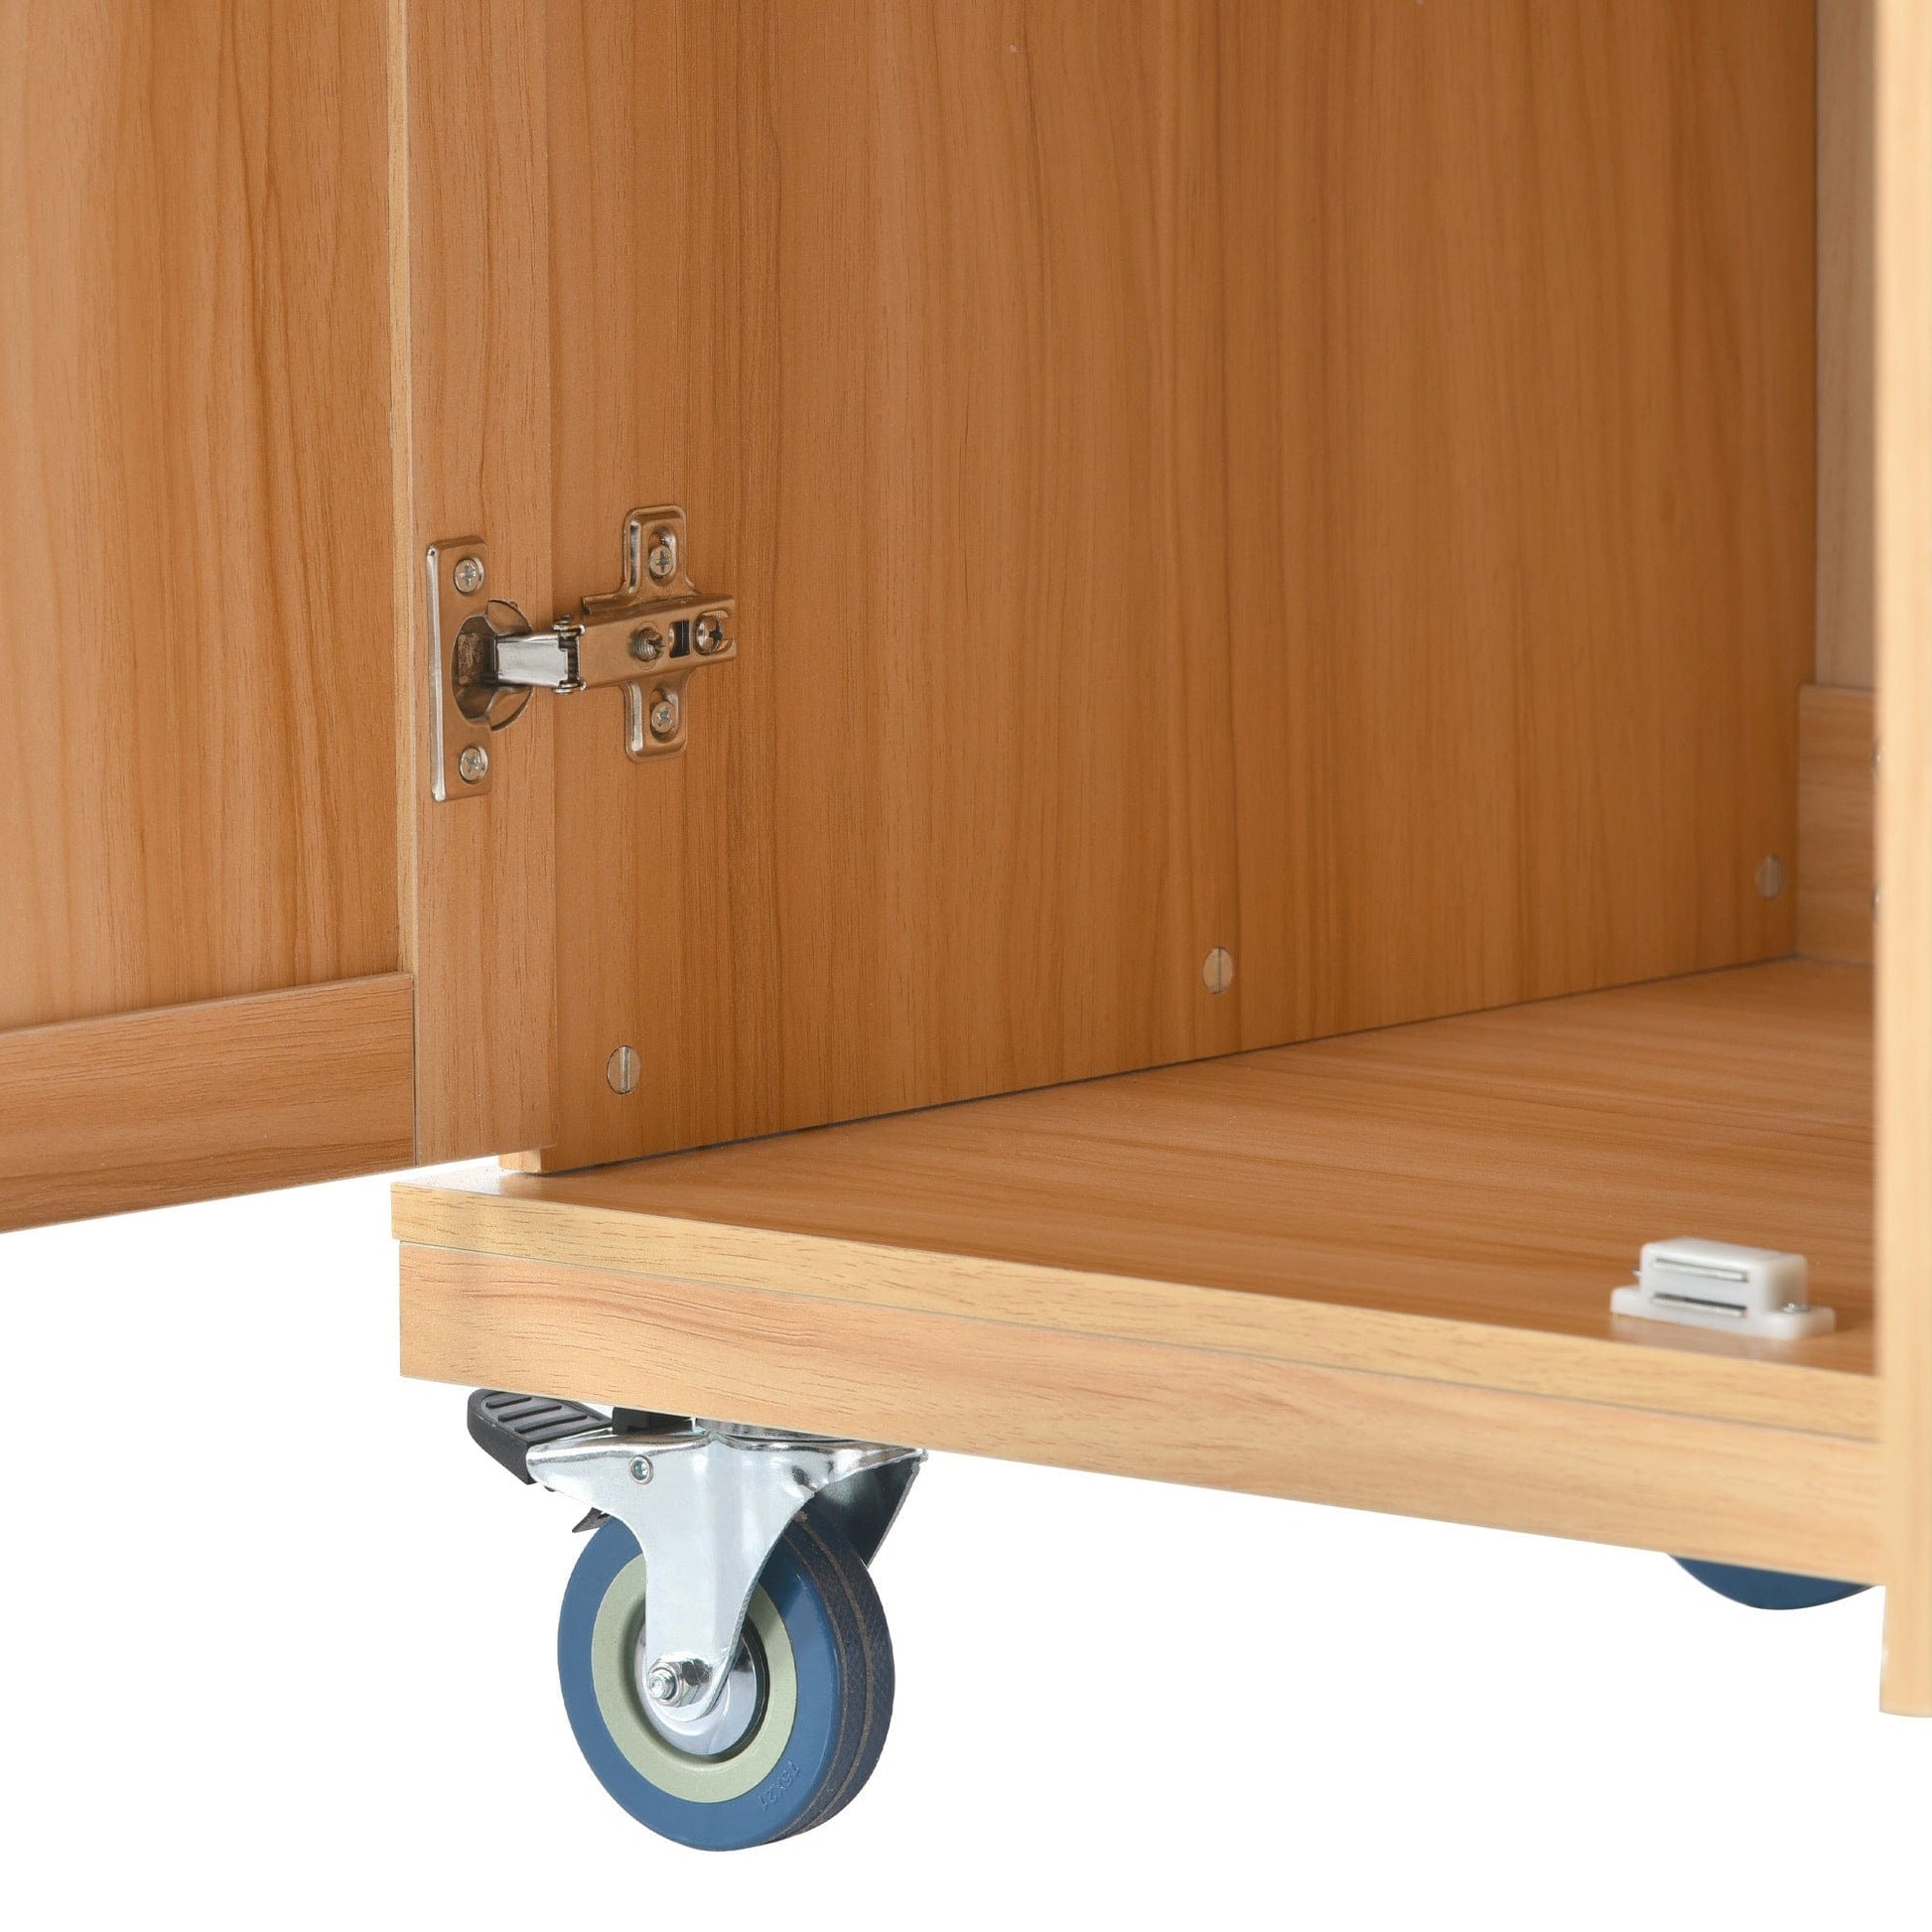 1st Choice Furniture Direct Kitchen Cart 1st Choice Stylish Kitchen Cart Storage on Wheels & Stainless Steel Top